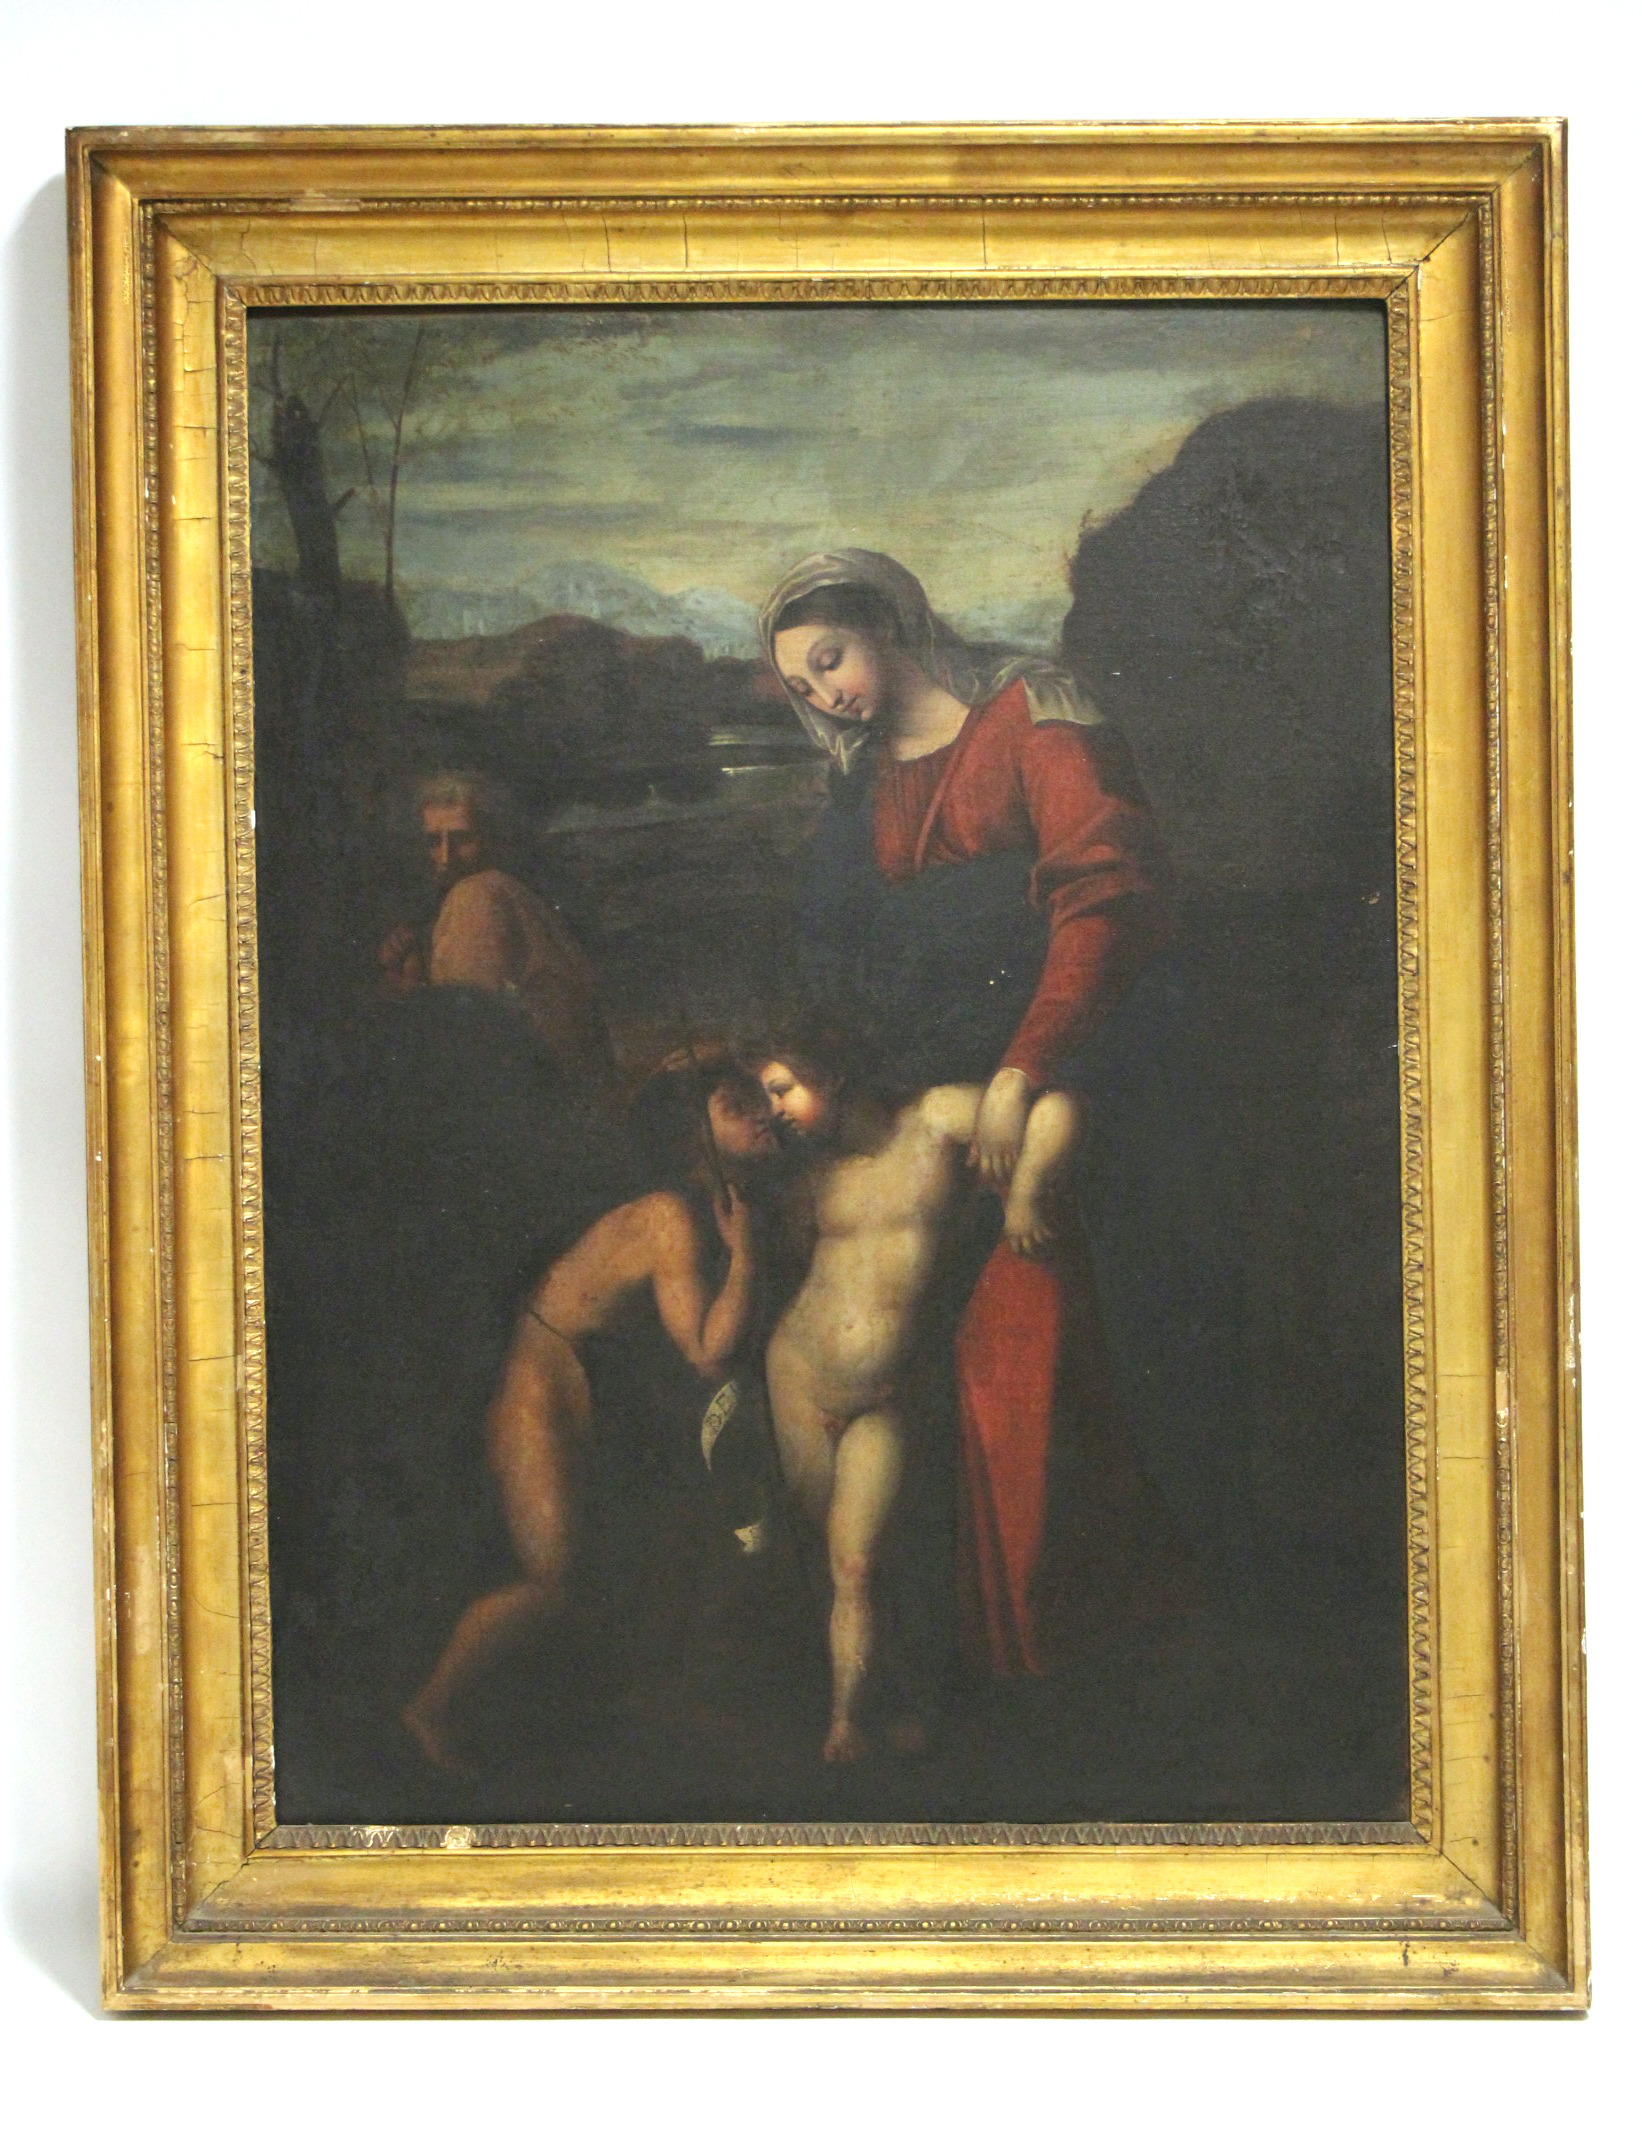 ITALIAN SCHOOL, 17th/18th century, after Raphael. The Madonna del Passegio. Oil on canvas: 30” x - Image 2 of 9